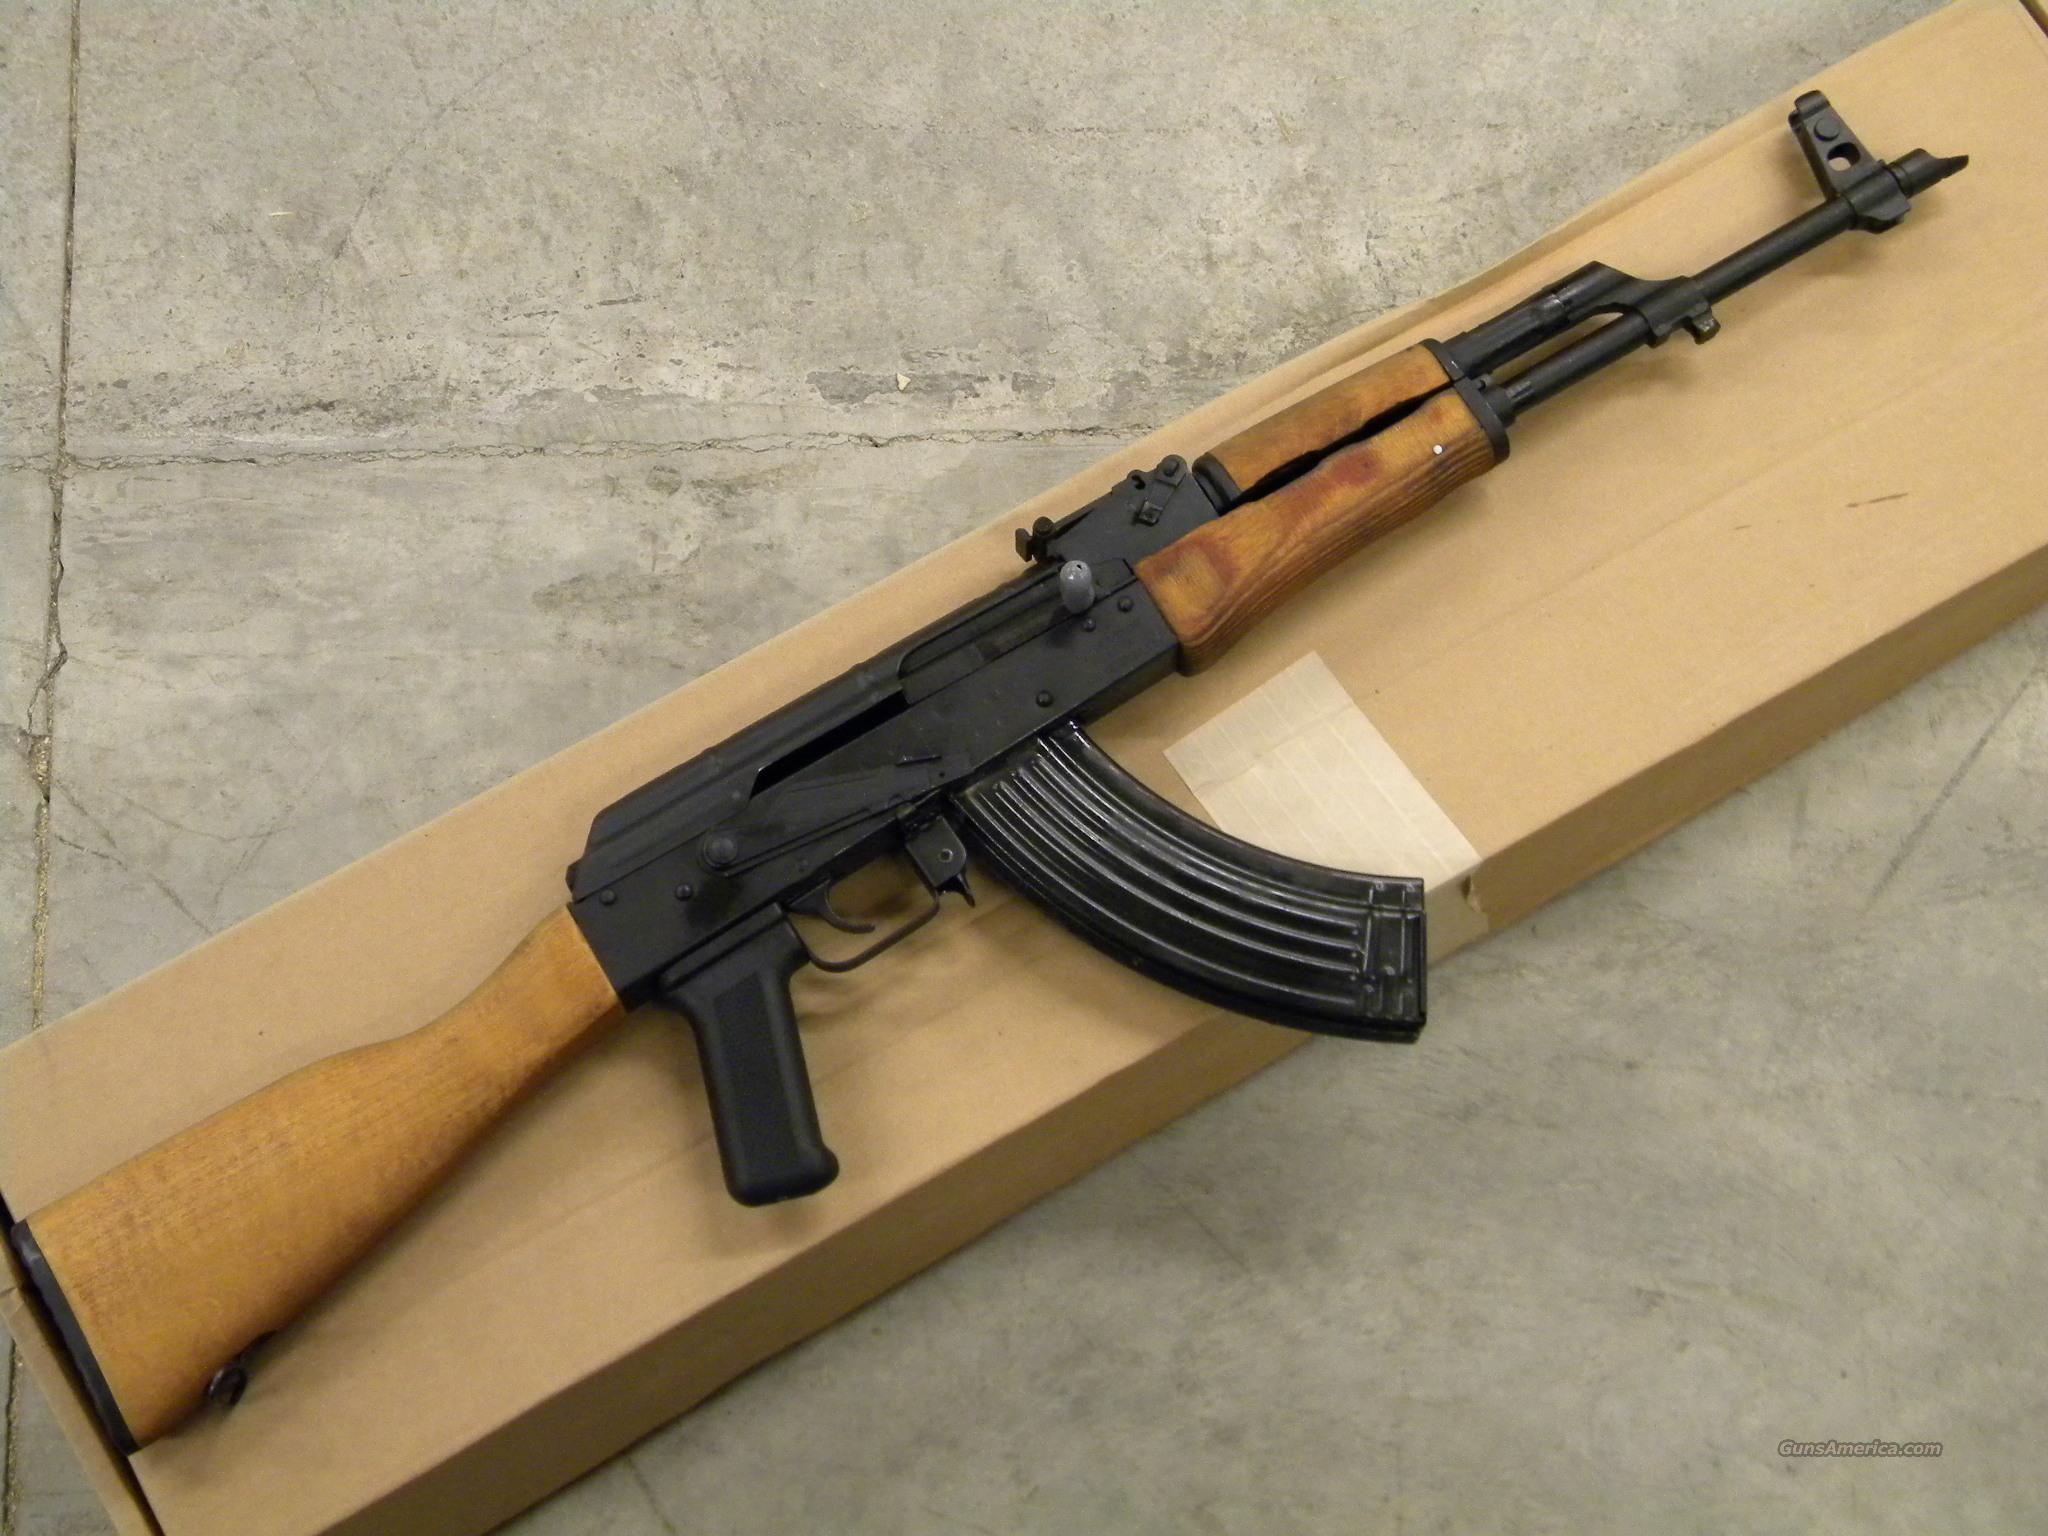 Romanian GP WASR 10 63 AK  47  for sale